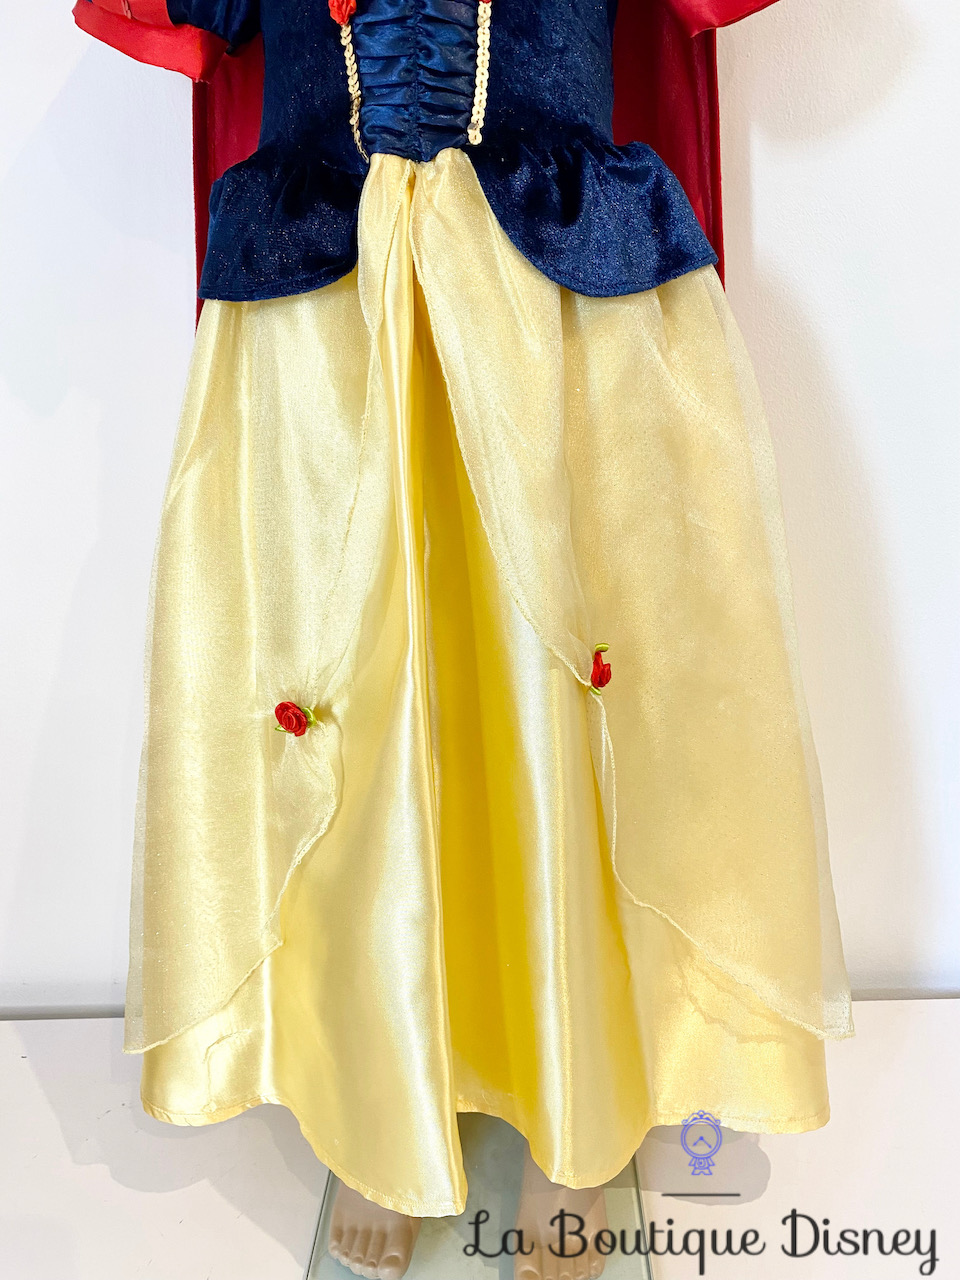 Déguisement robe 'Blanche Neige' - bleu/jaune - Kiabi - 23.00€